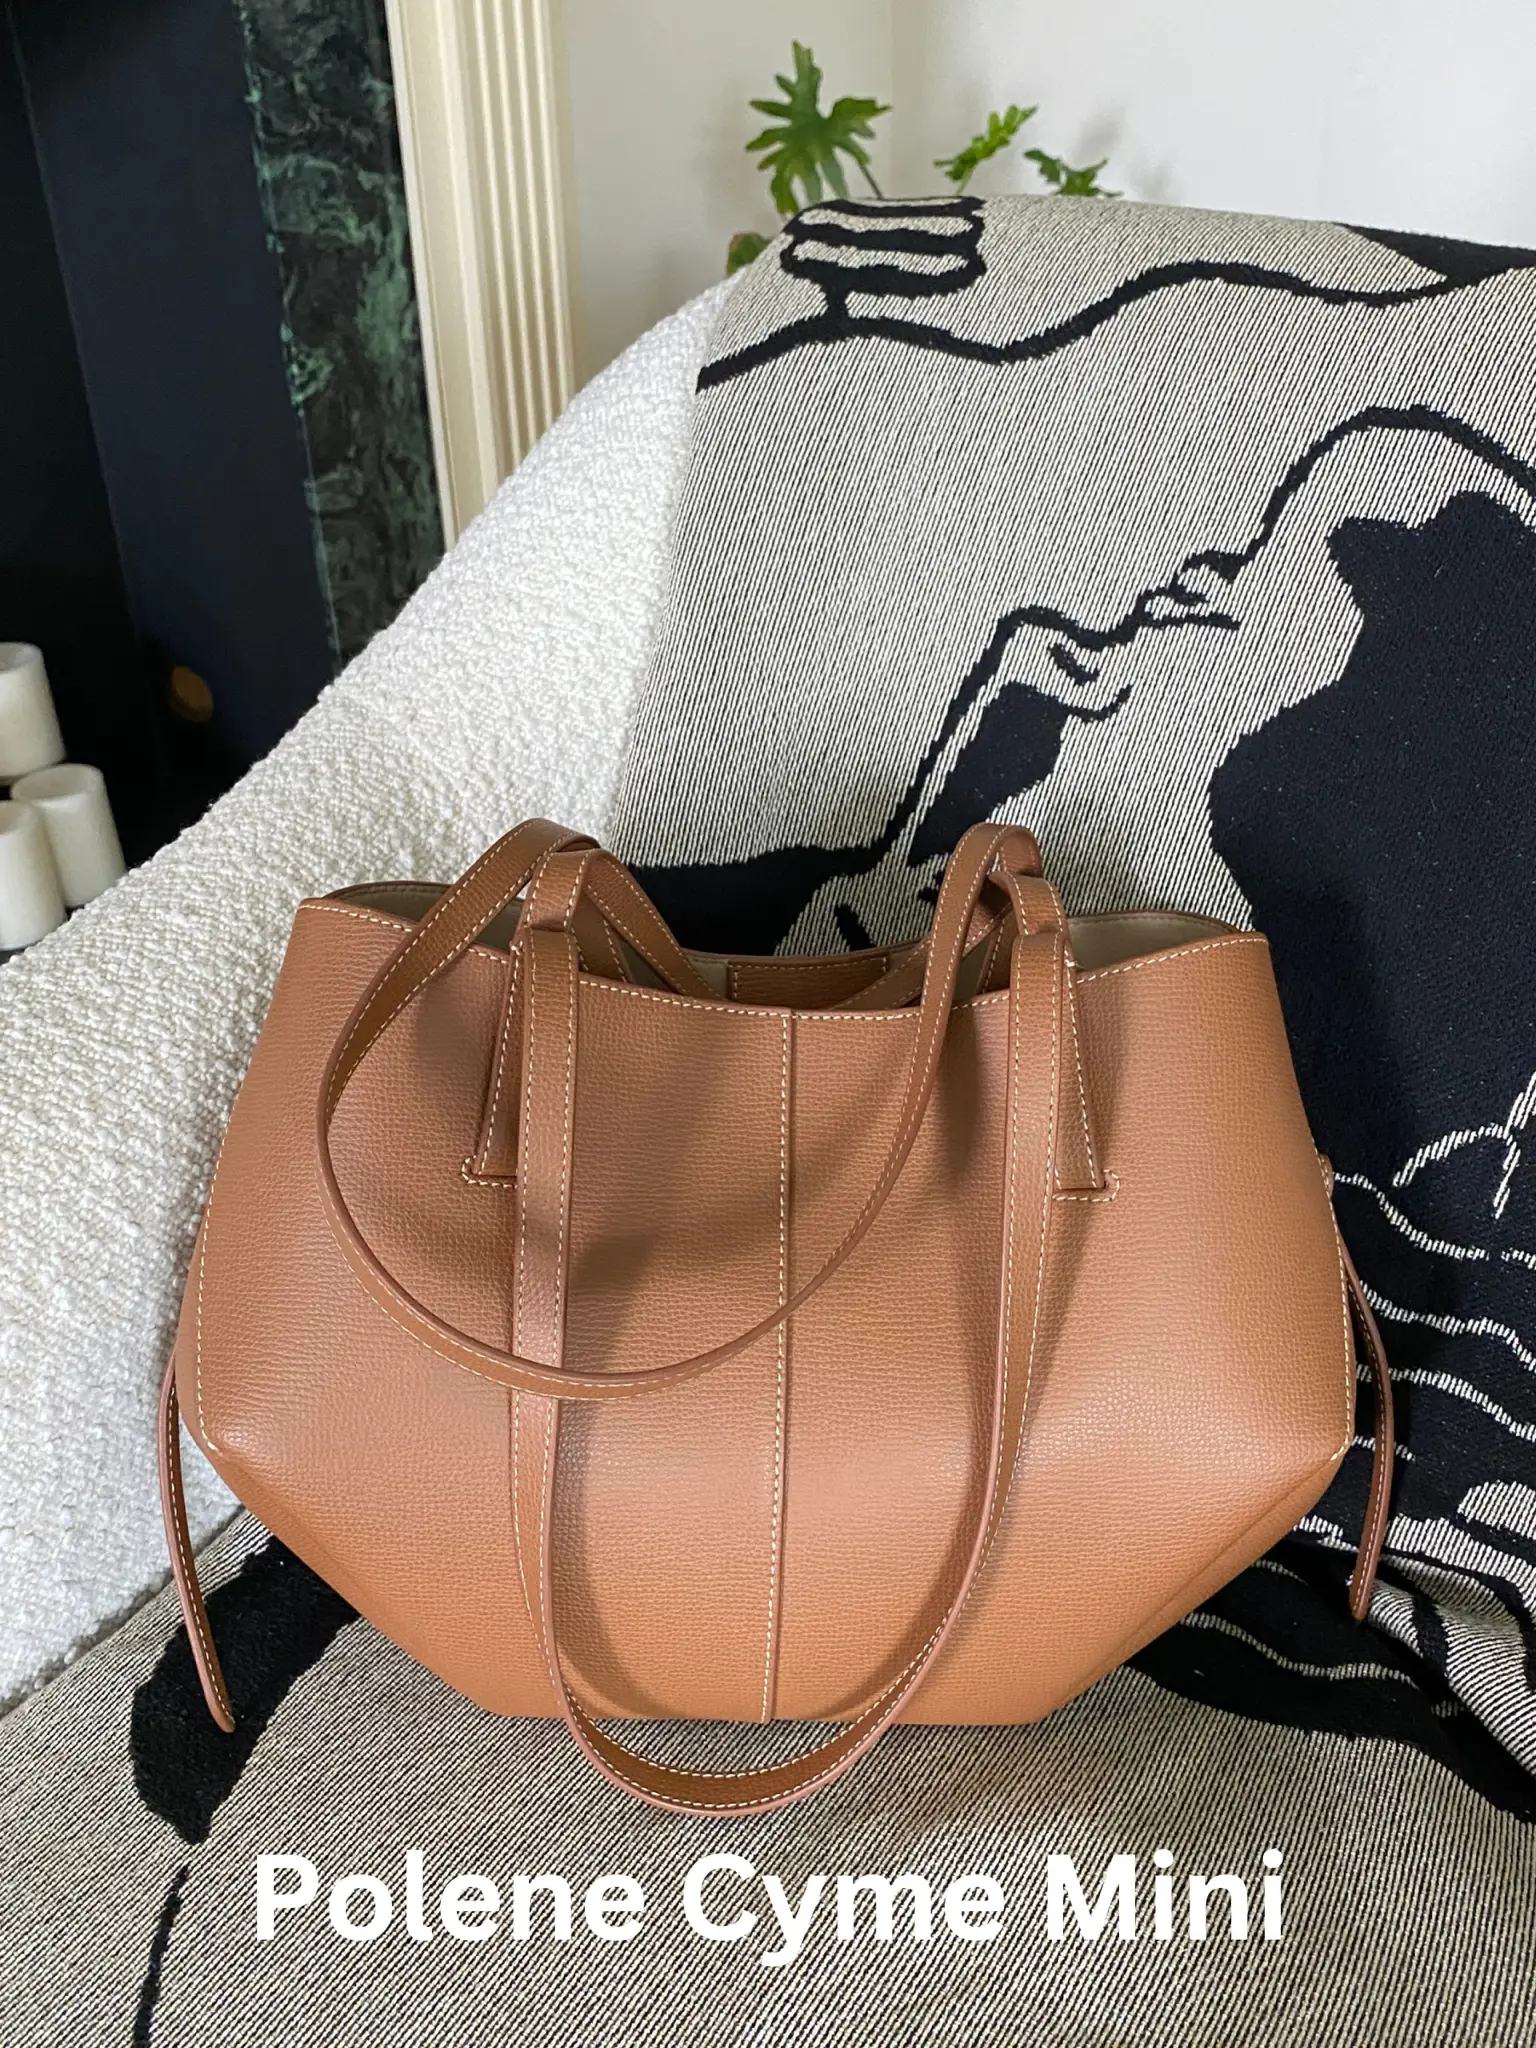 My first polene 🥹 : r/handbags